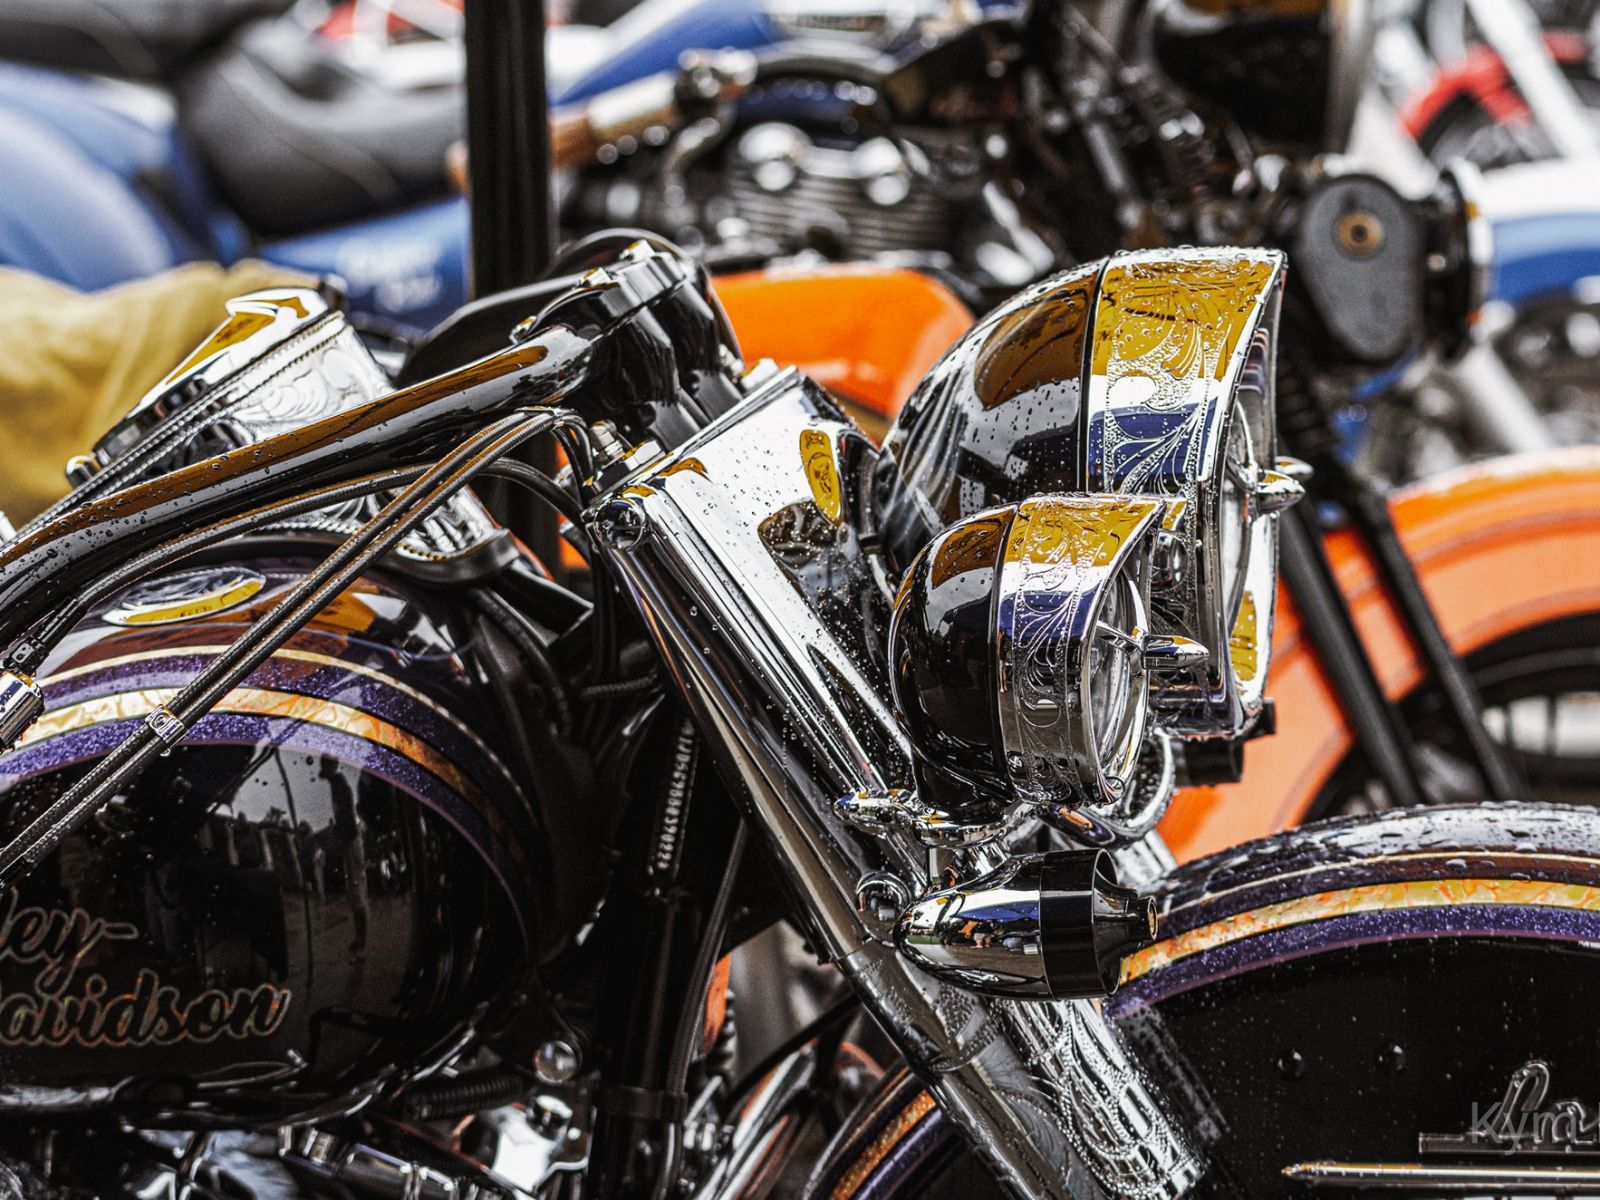 Up close Harley Davidson